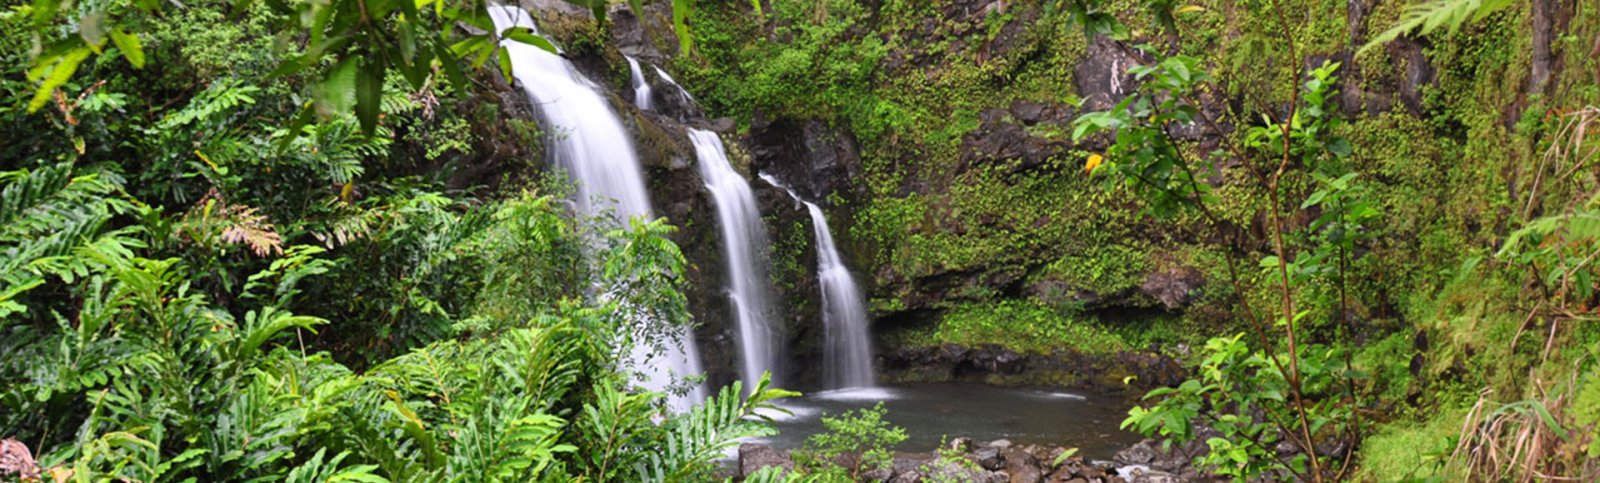 Waterfall along the famous Road to Hana